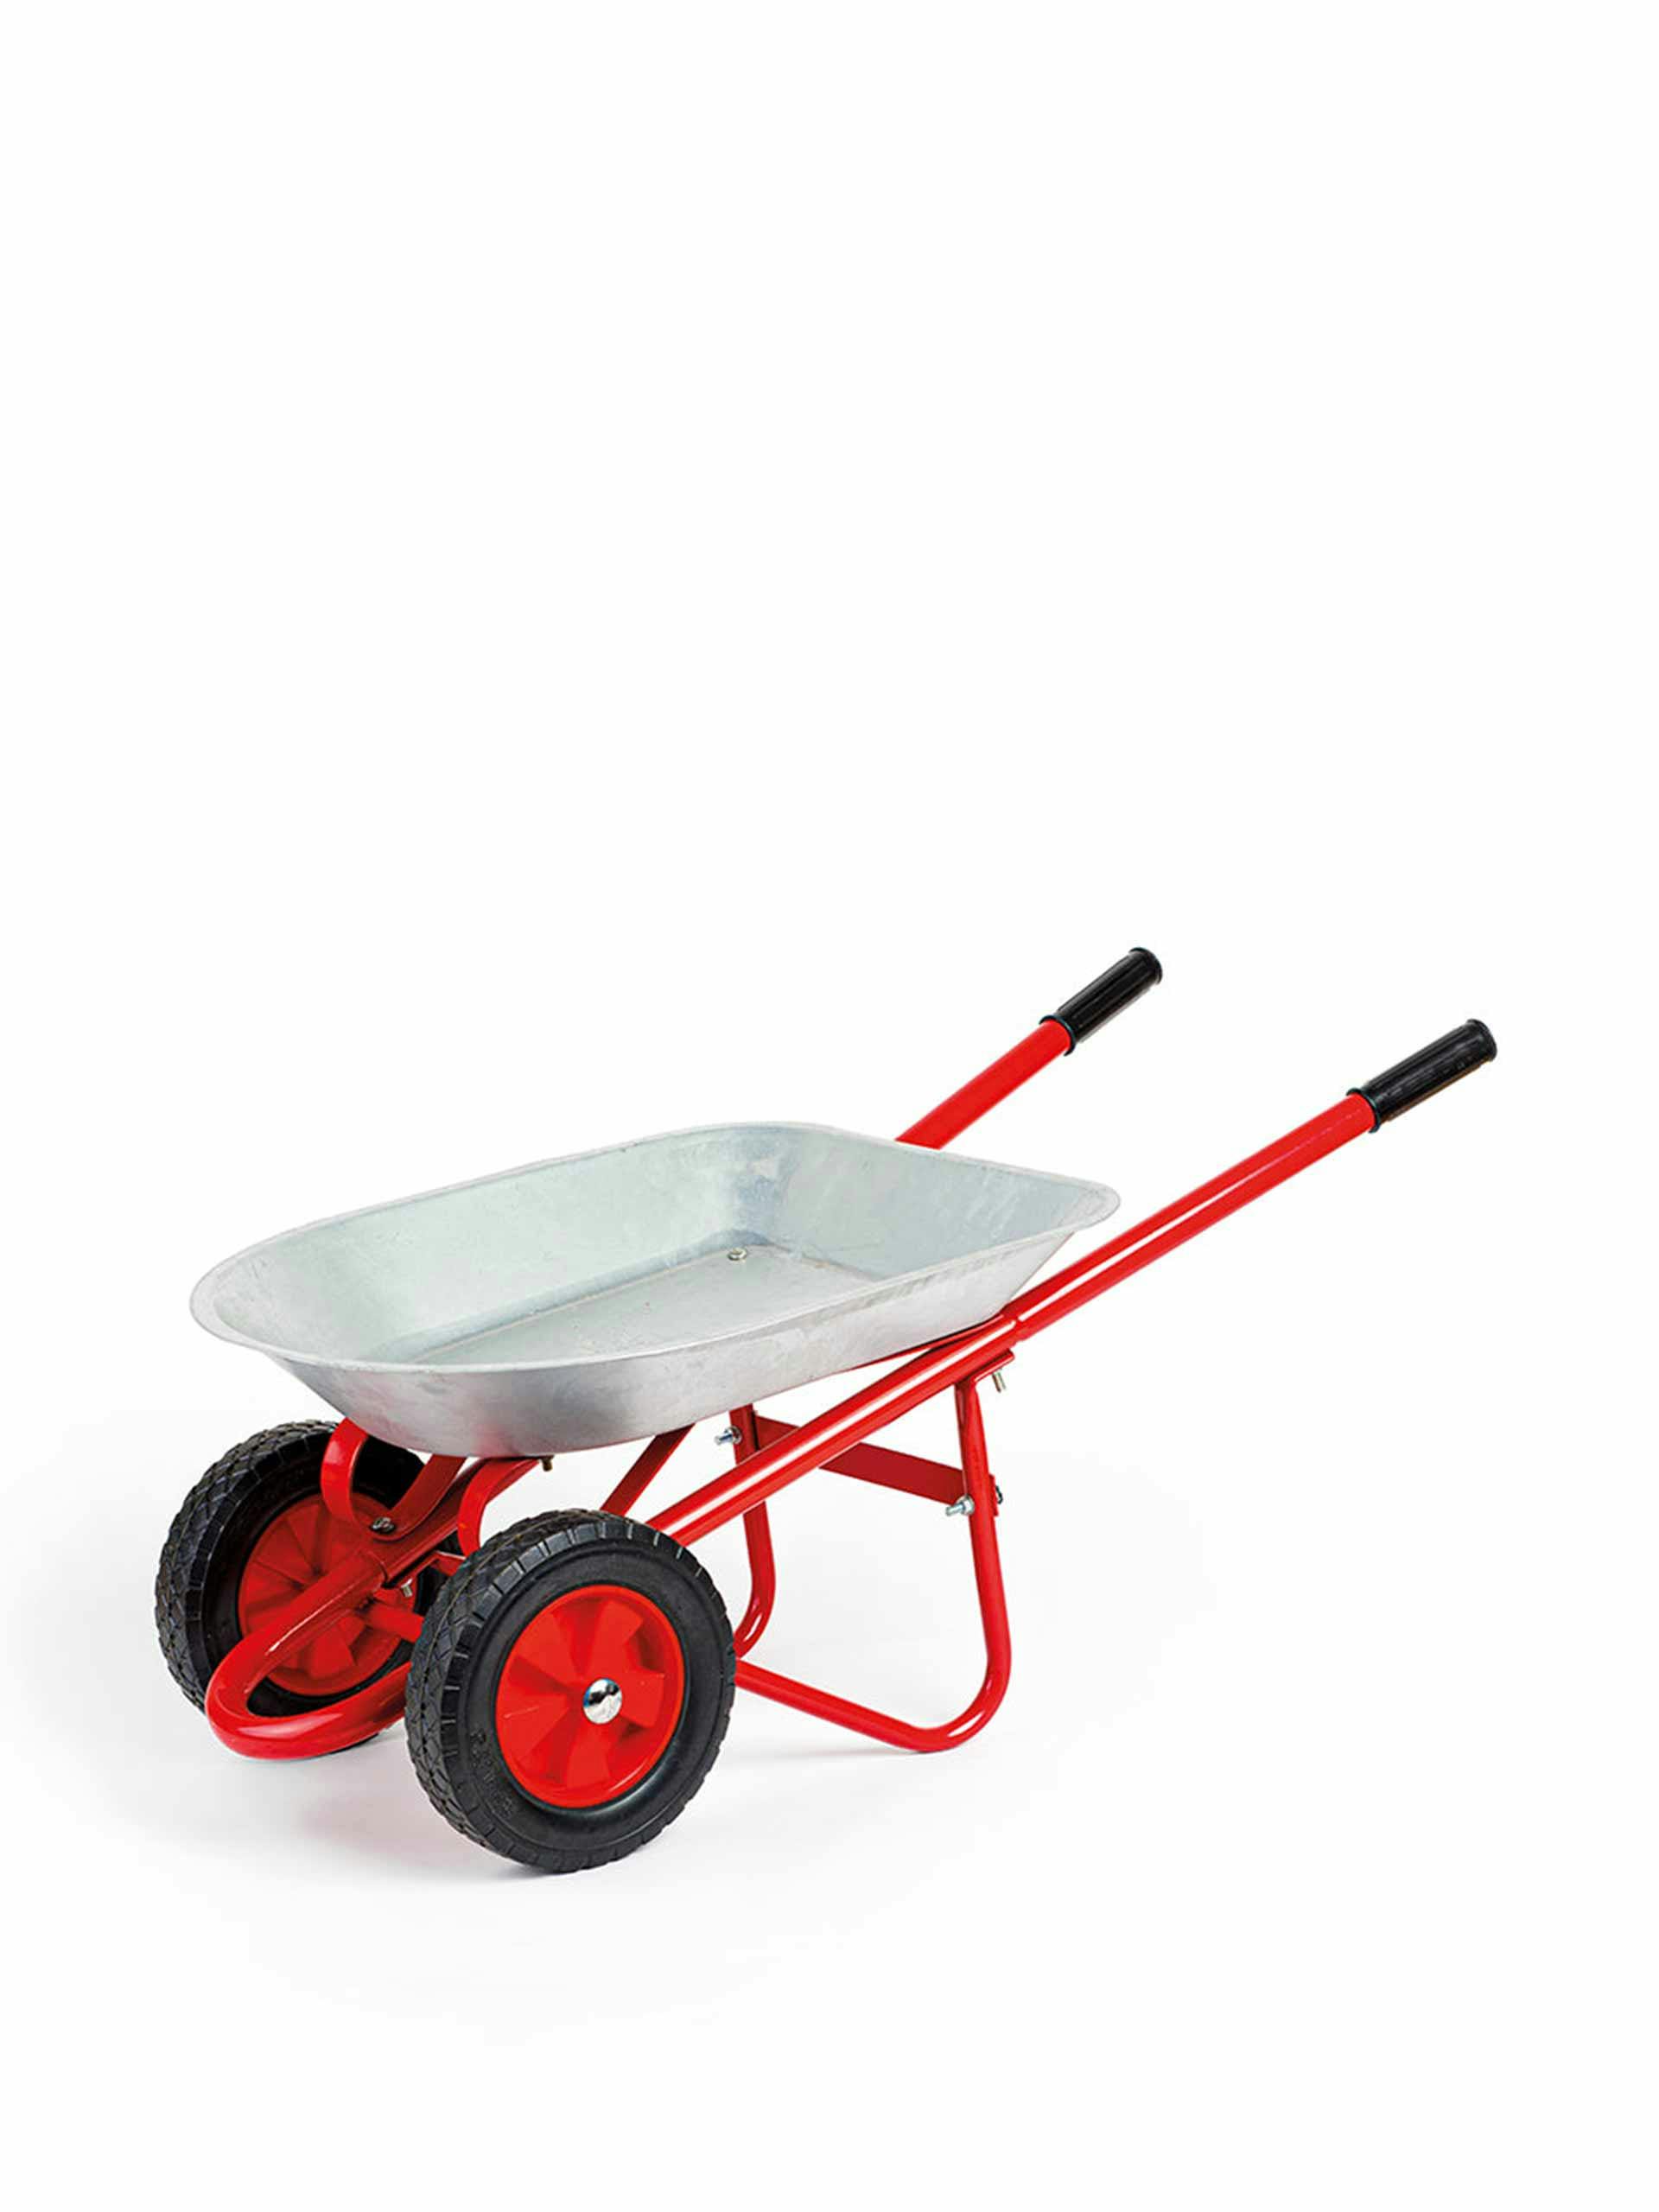 Toy wheelbarrow